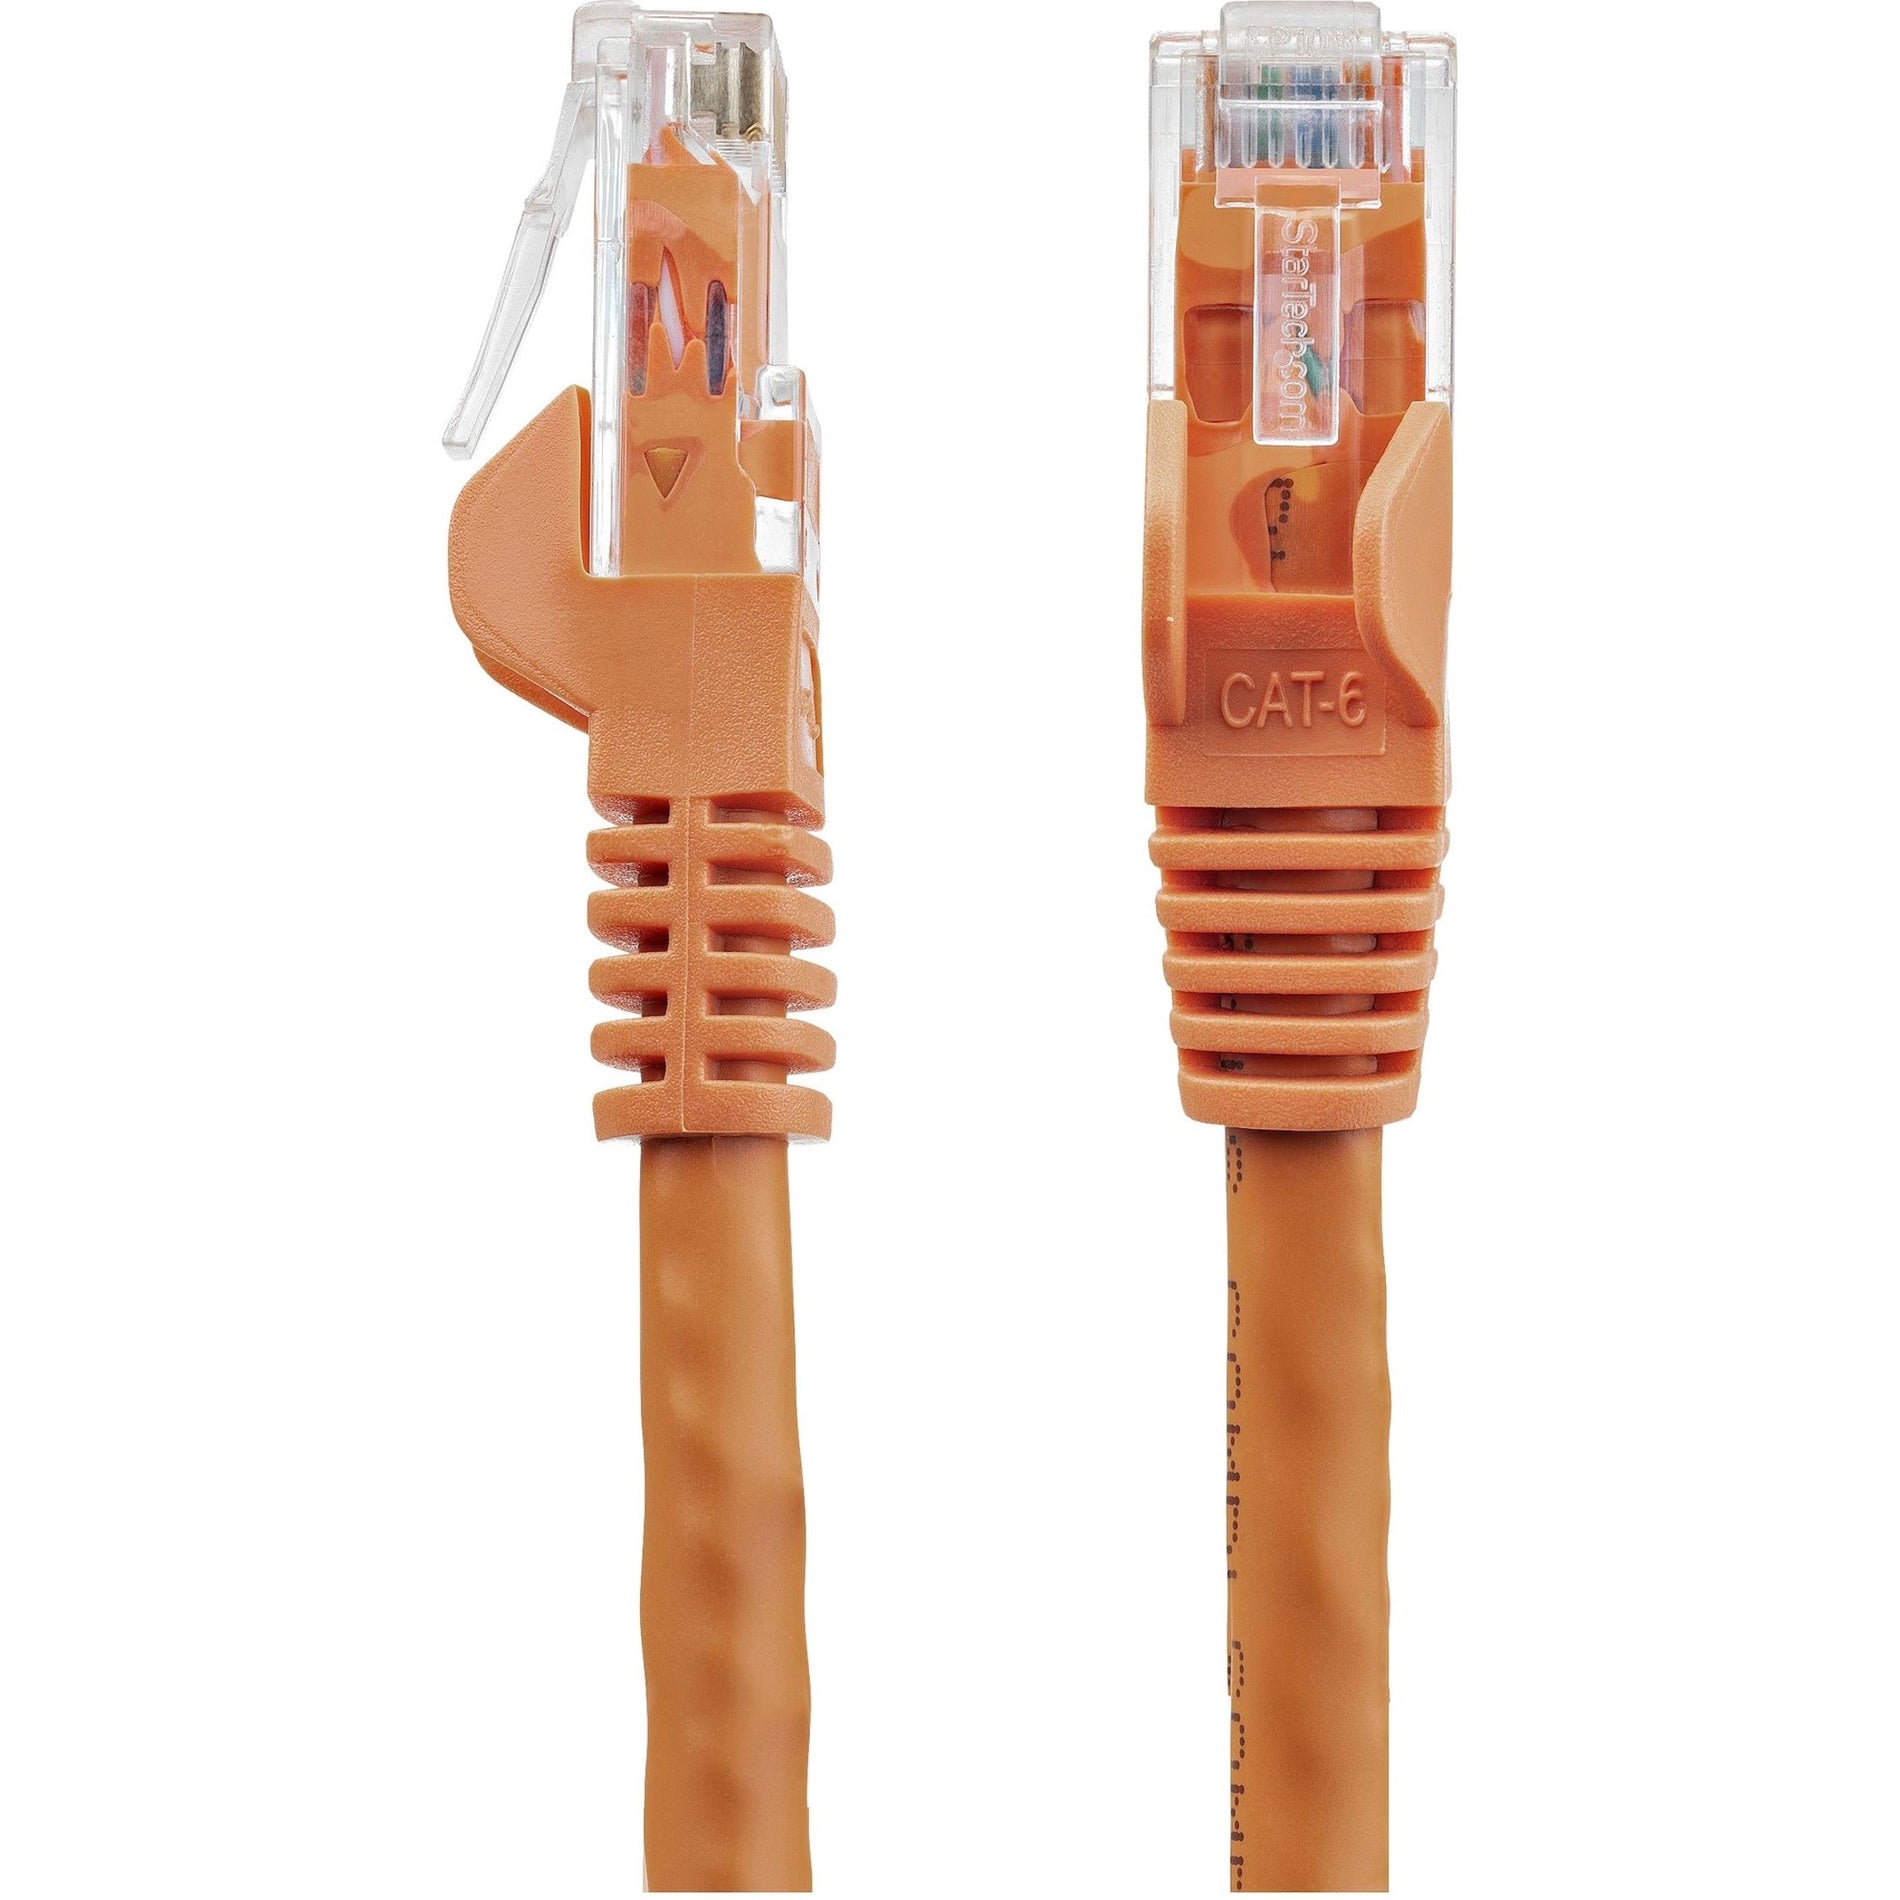 Marca: StarTech.com  Cable de conexión Cat6 UTP sin enganches de 3 pies de color naranja Garantía de por vida Velocidad de transferencia de datos de 10 Gbps